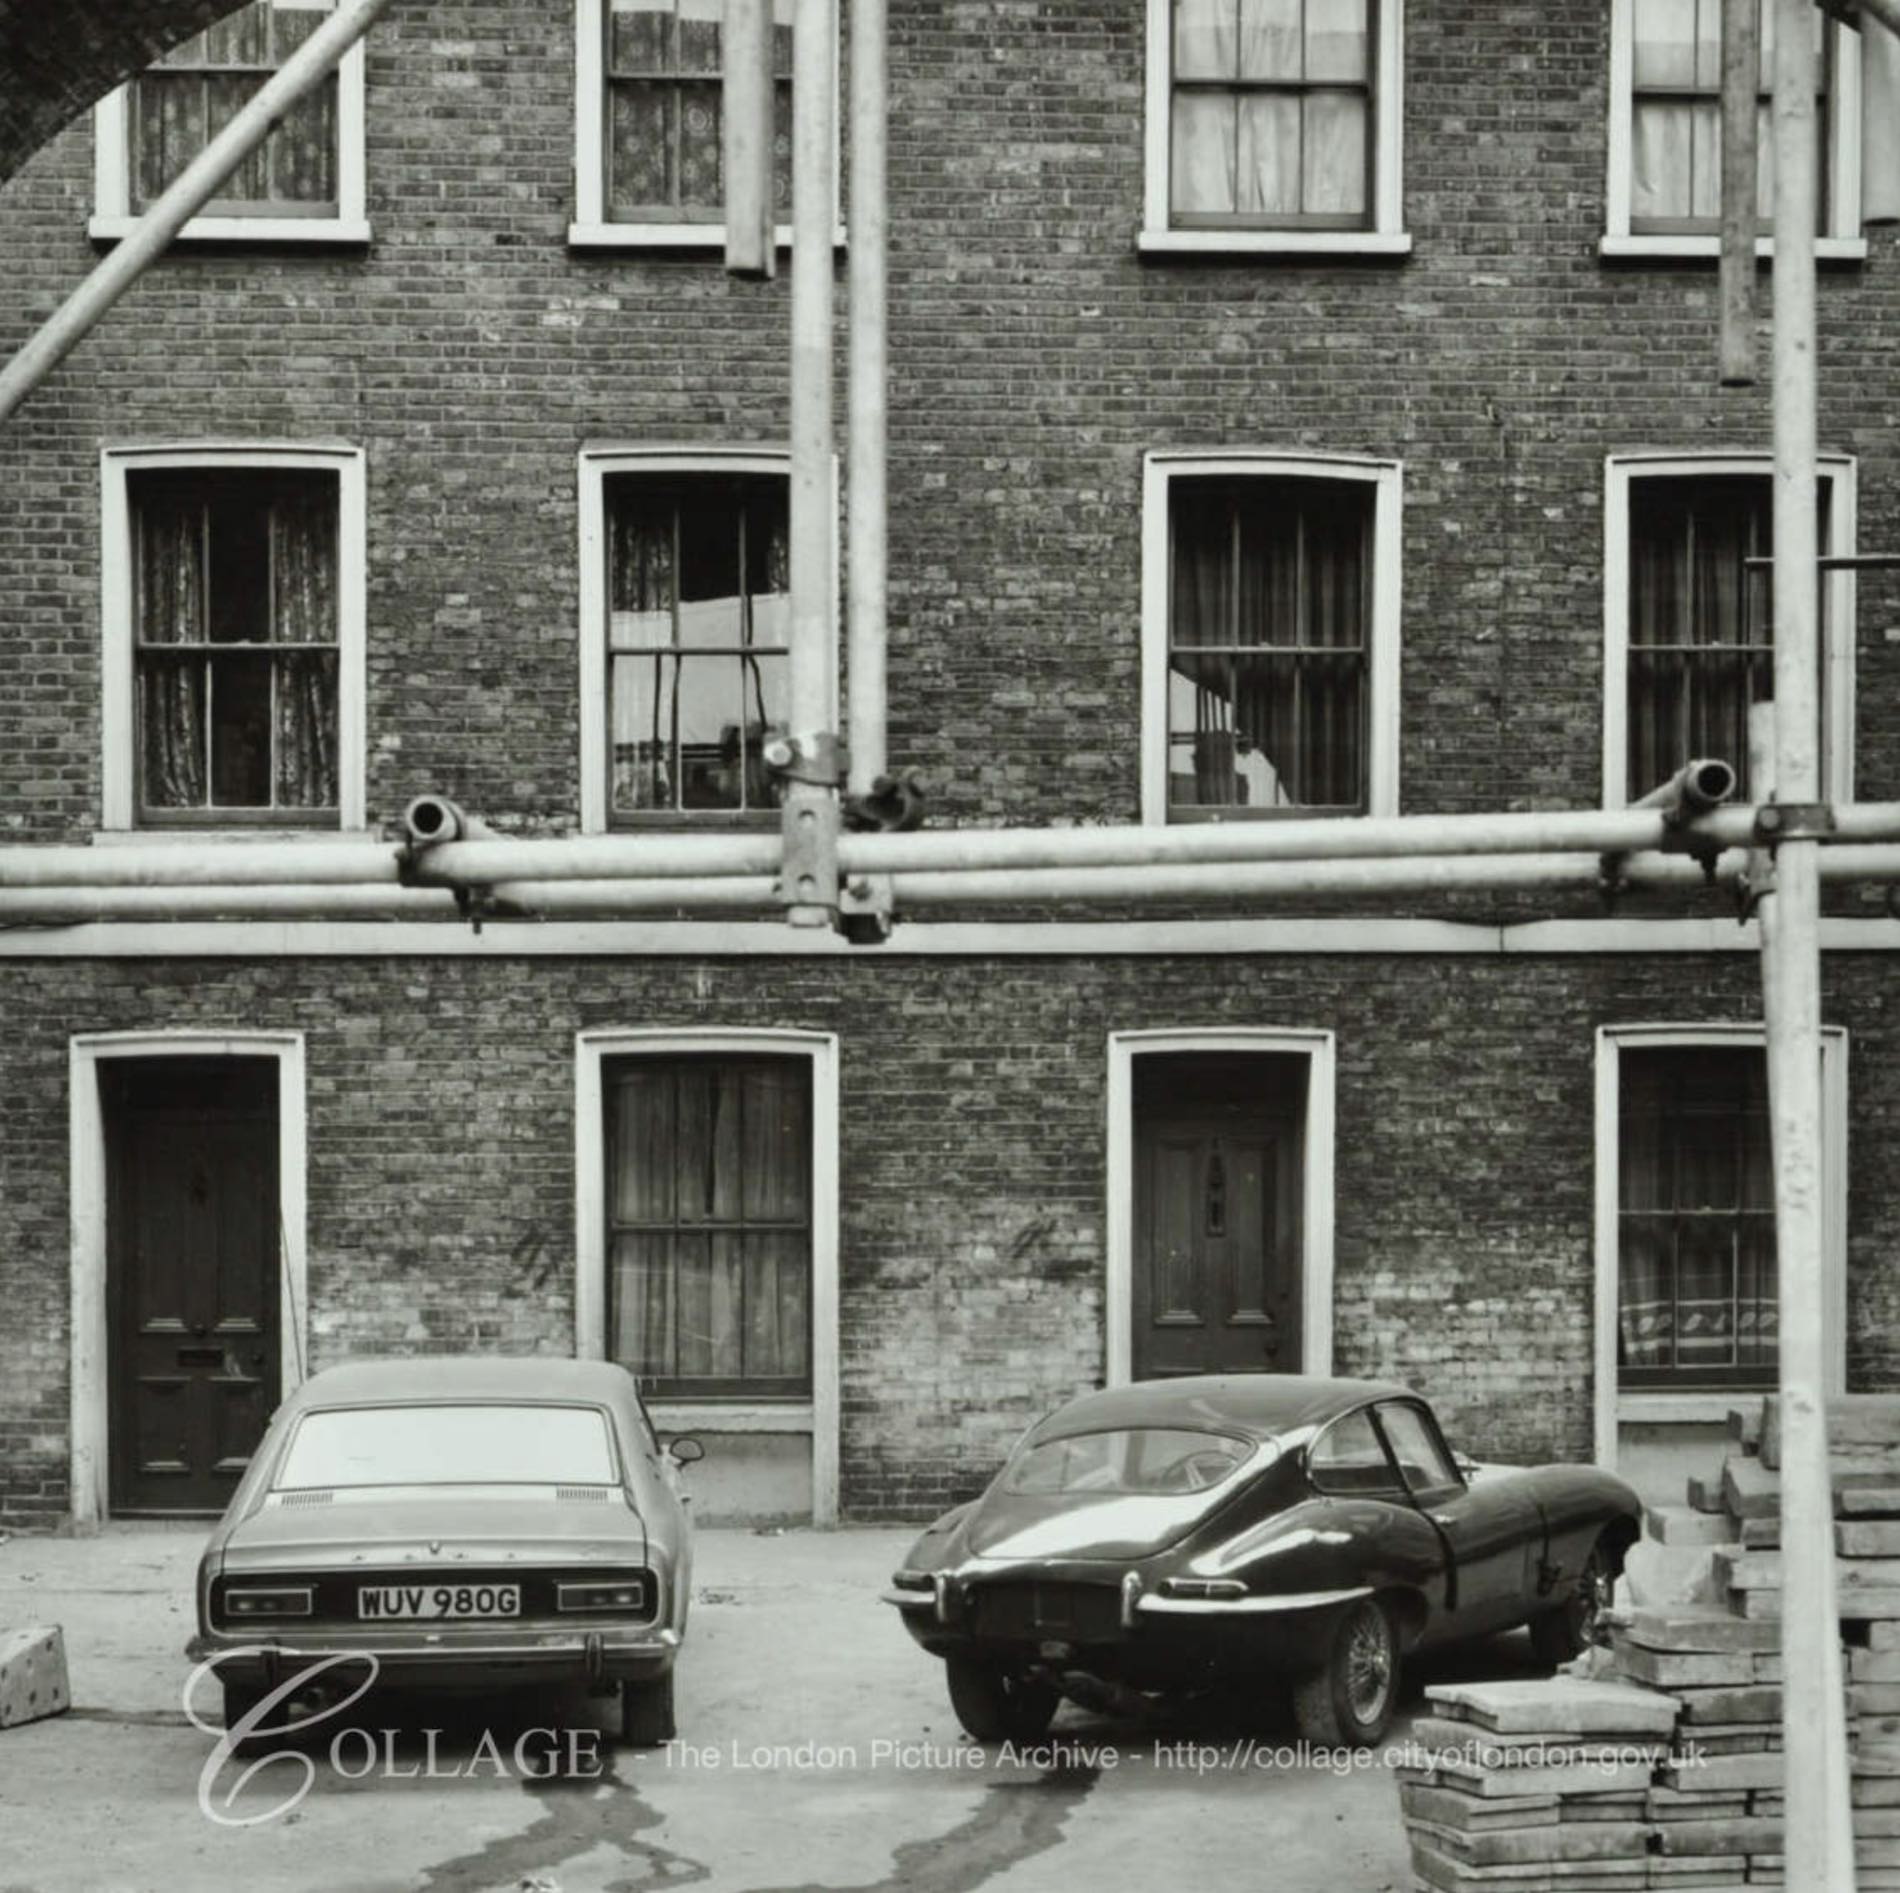 London Collage Archive a treasure trove for classic car fans